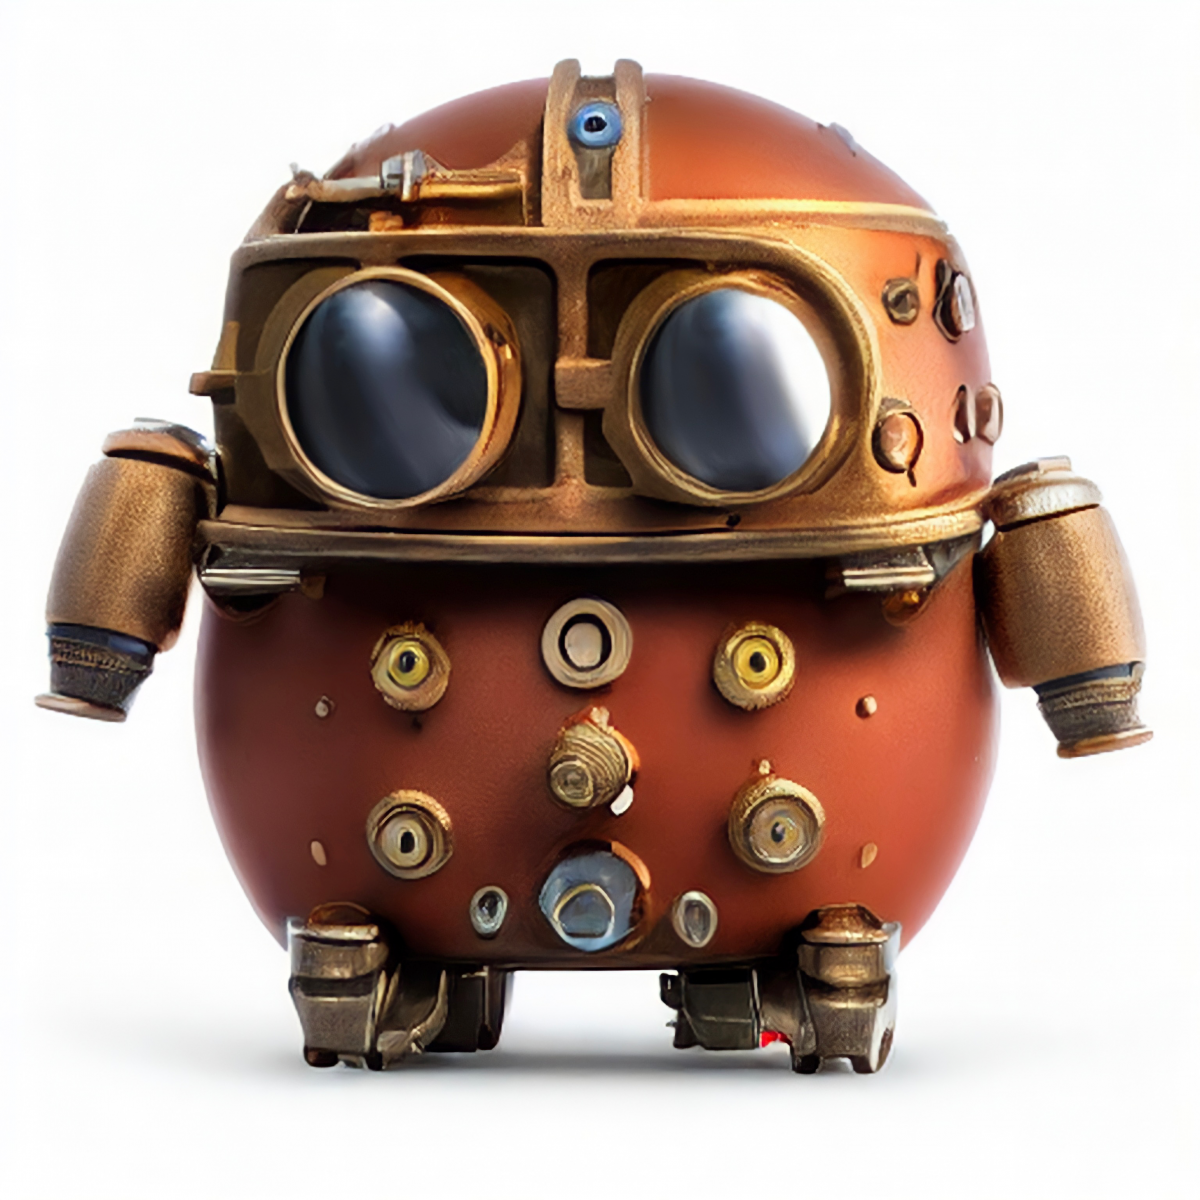 The Oddtoe robot or brand mascot